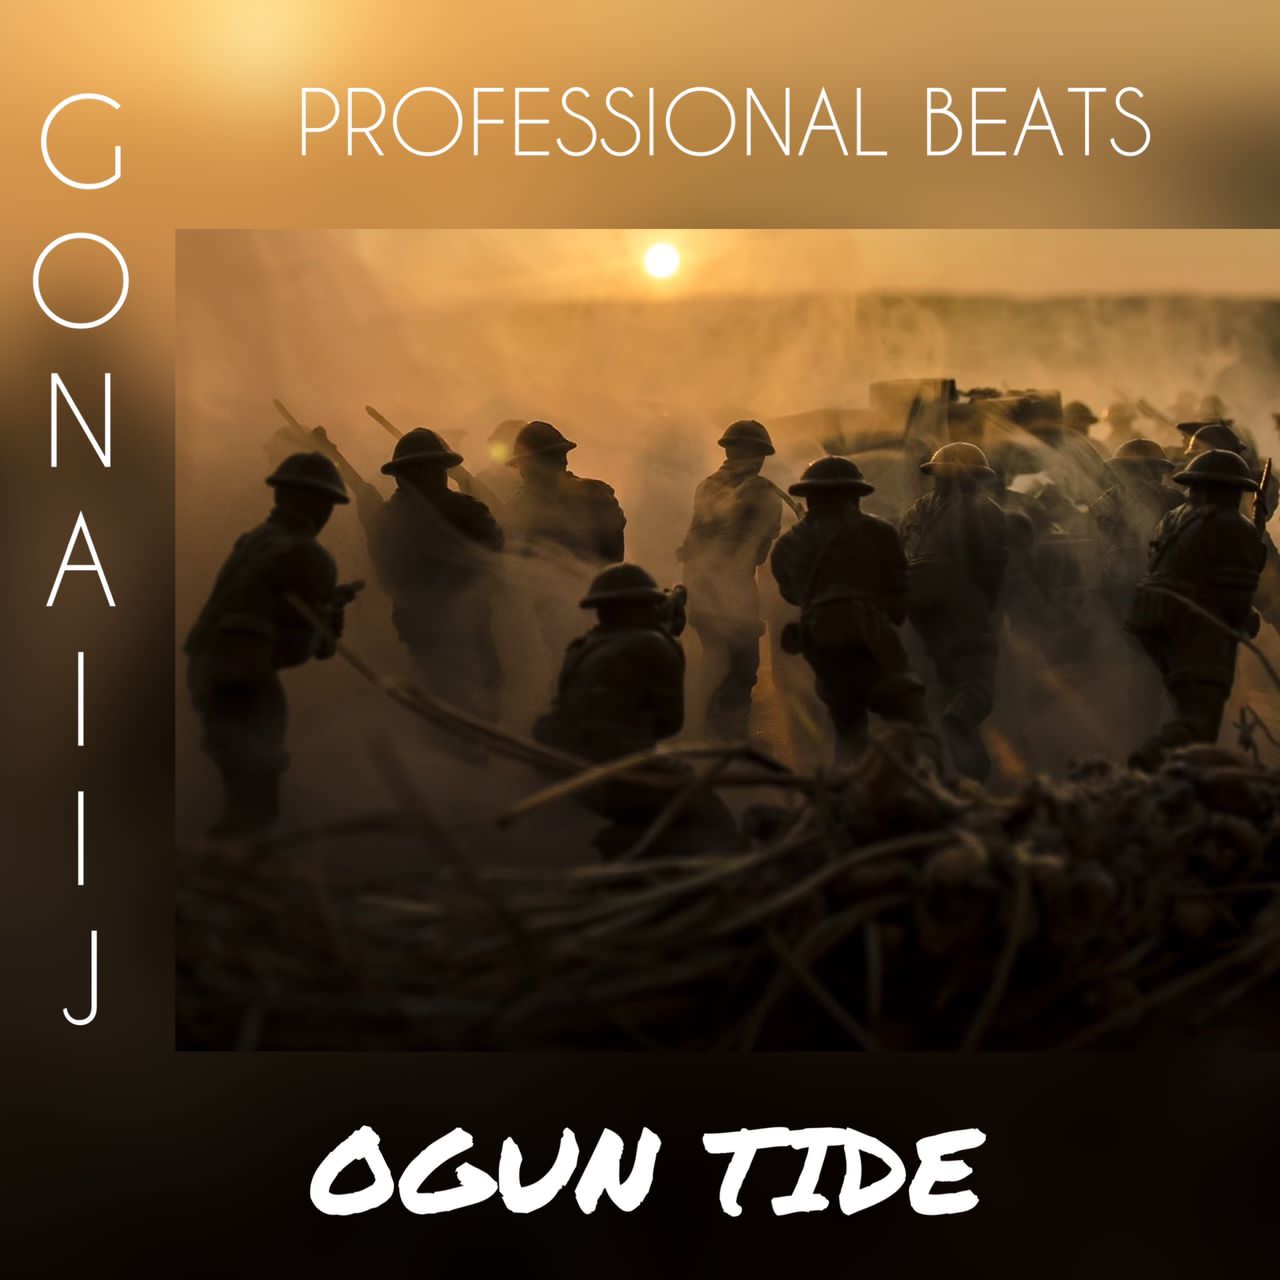 Professional beat ft Gonaiij - Ogun tide Free Beat